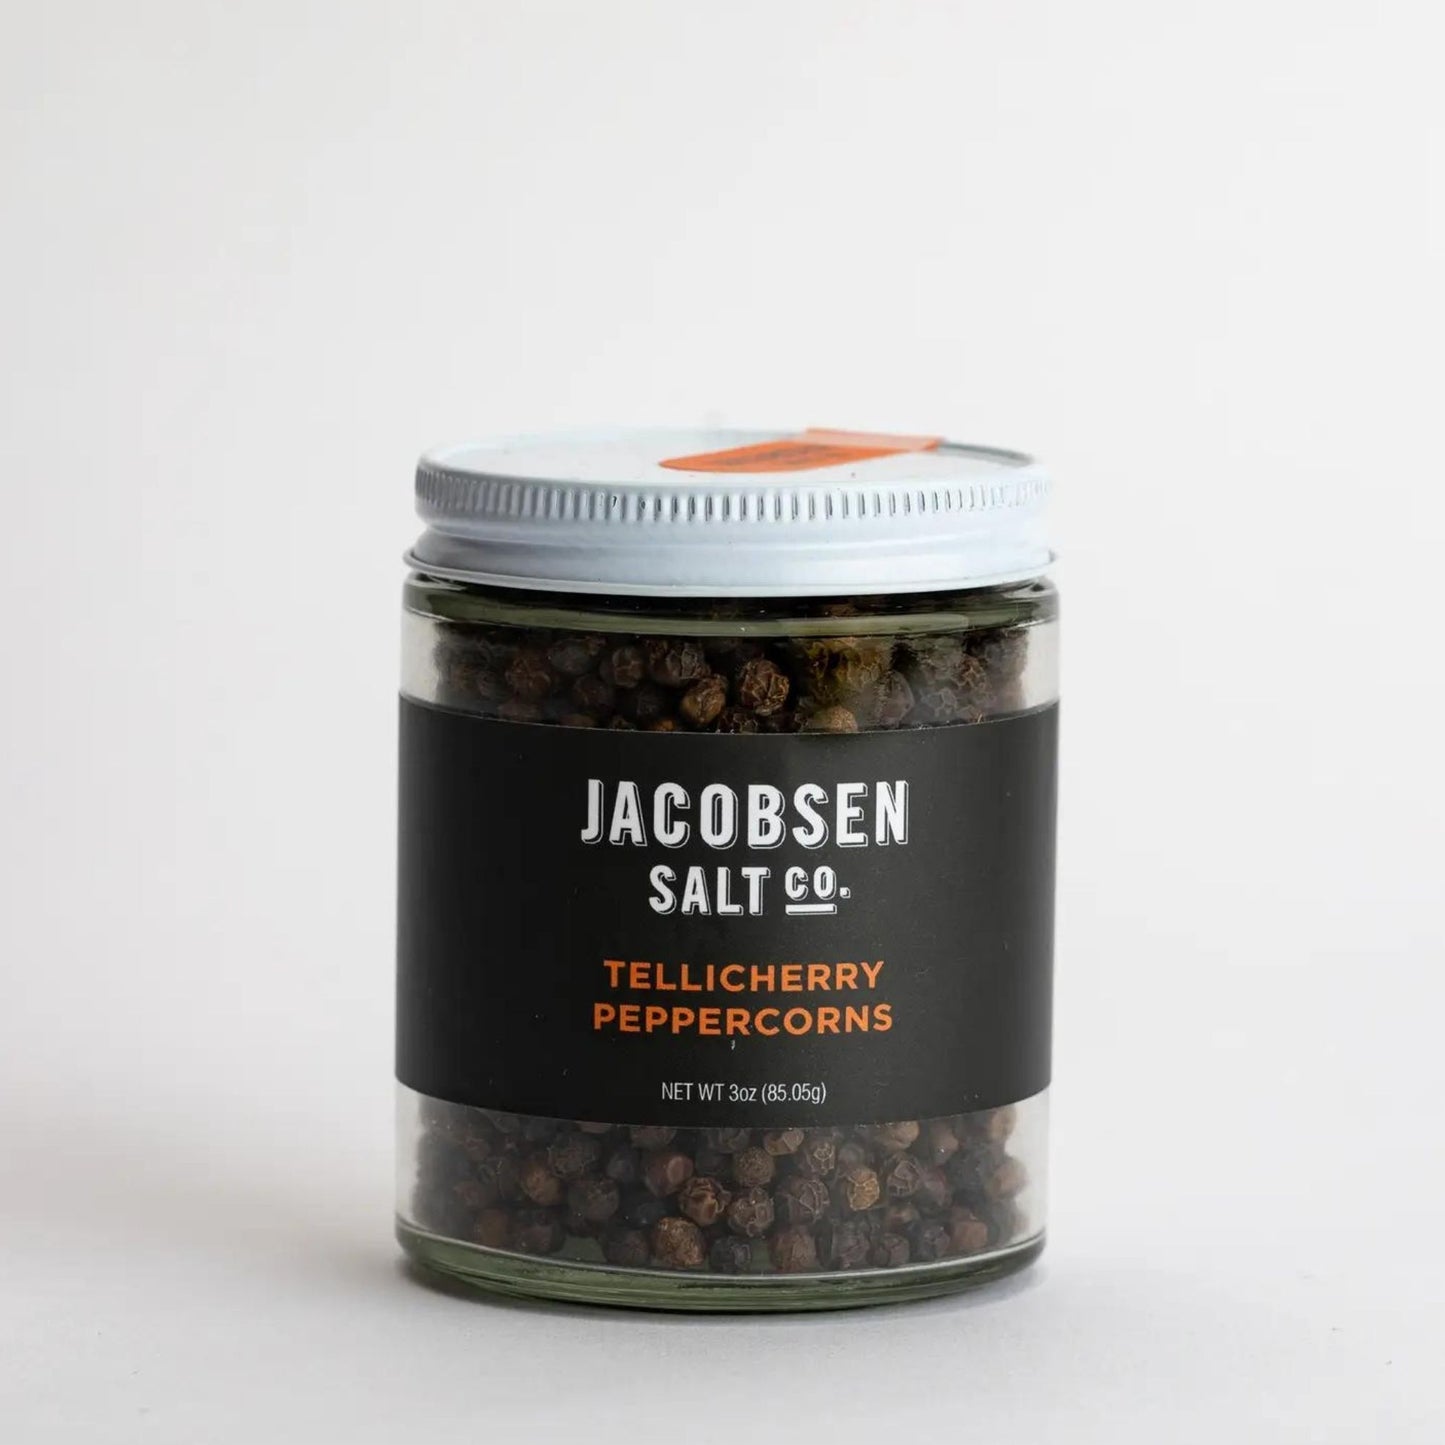 Jacobsen Salt Co. Tellicherry Peppercorns